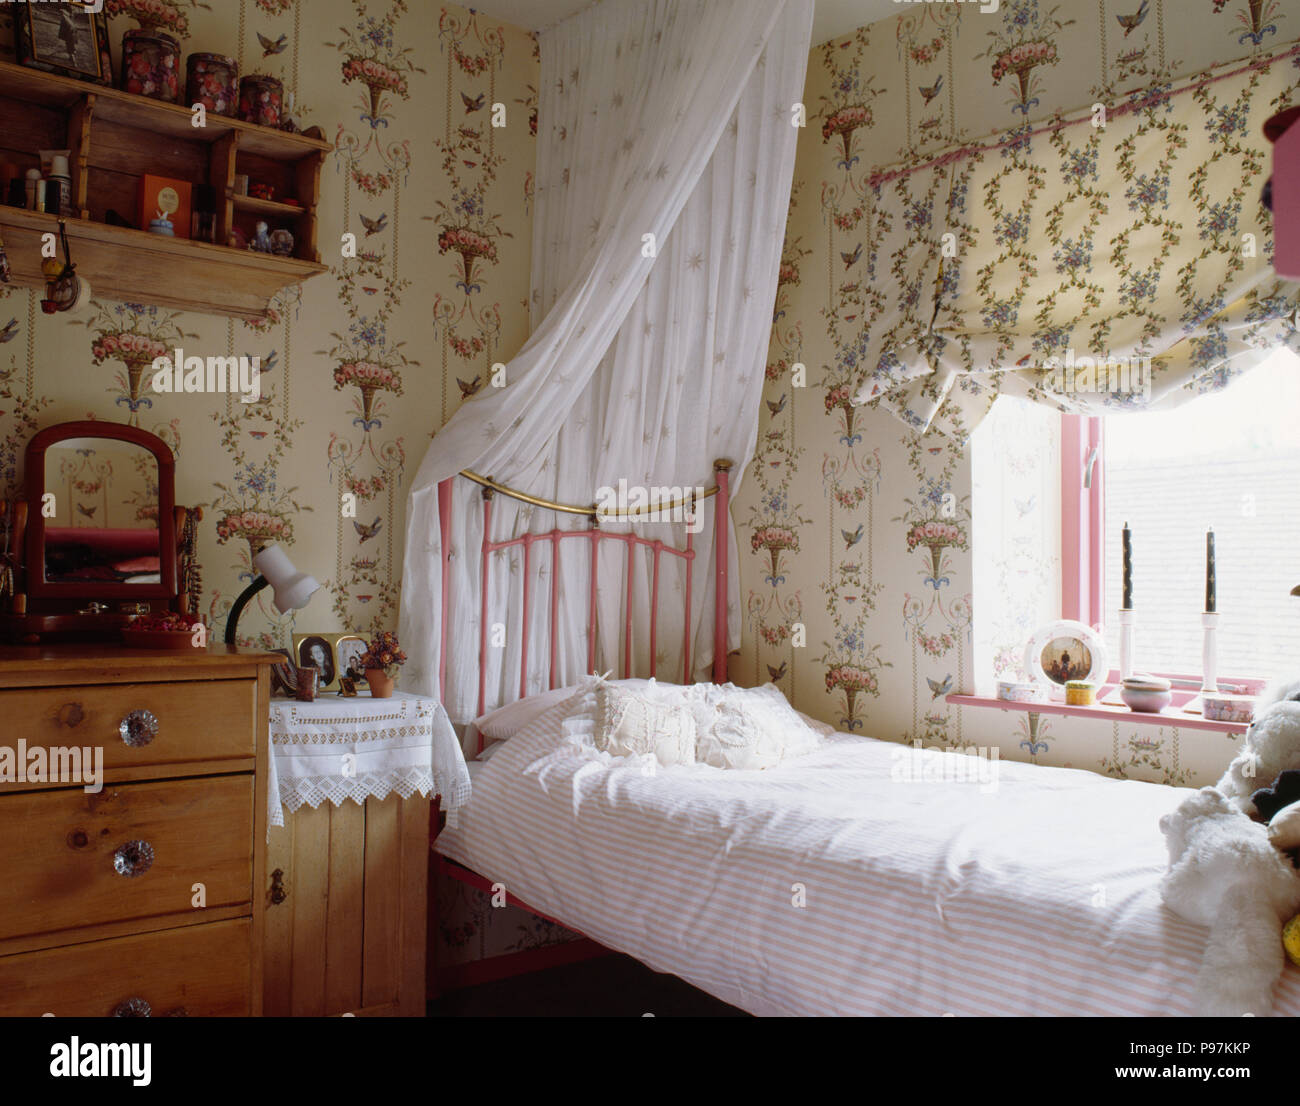 https://c8.alamy.com/comp/P97KKP/patterned-wallpaper-and-blind-in-teenager-girls-bedroom-with-white-drapes-on-pink-single-brass-bed-P97KKP.jpg